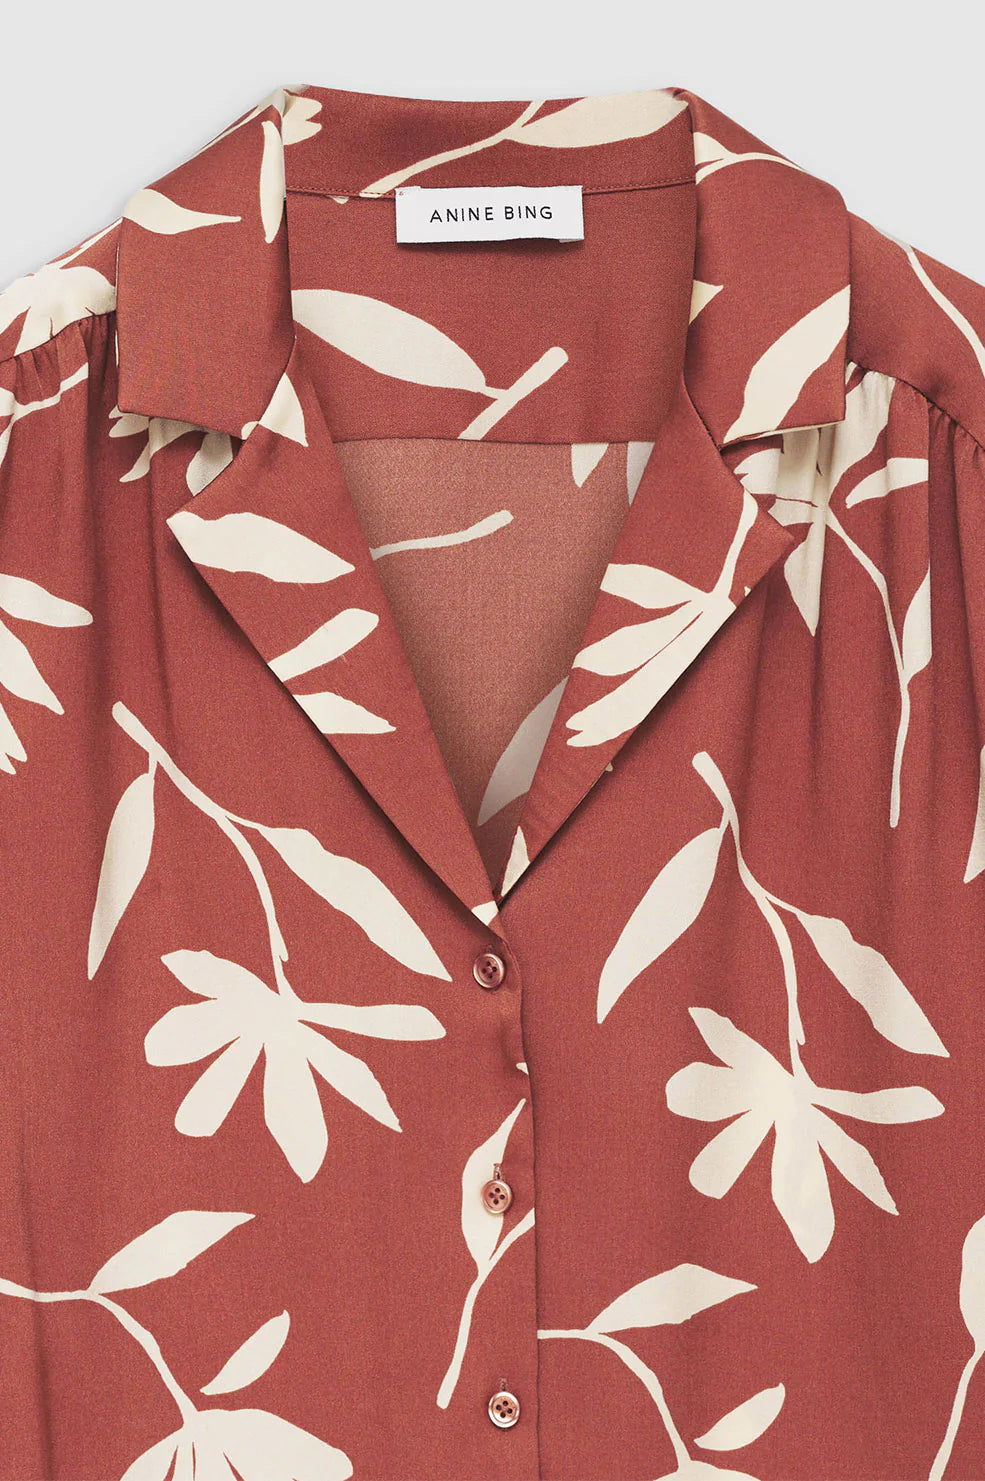 Row Shirt in Terracotta Daisy Print